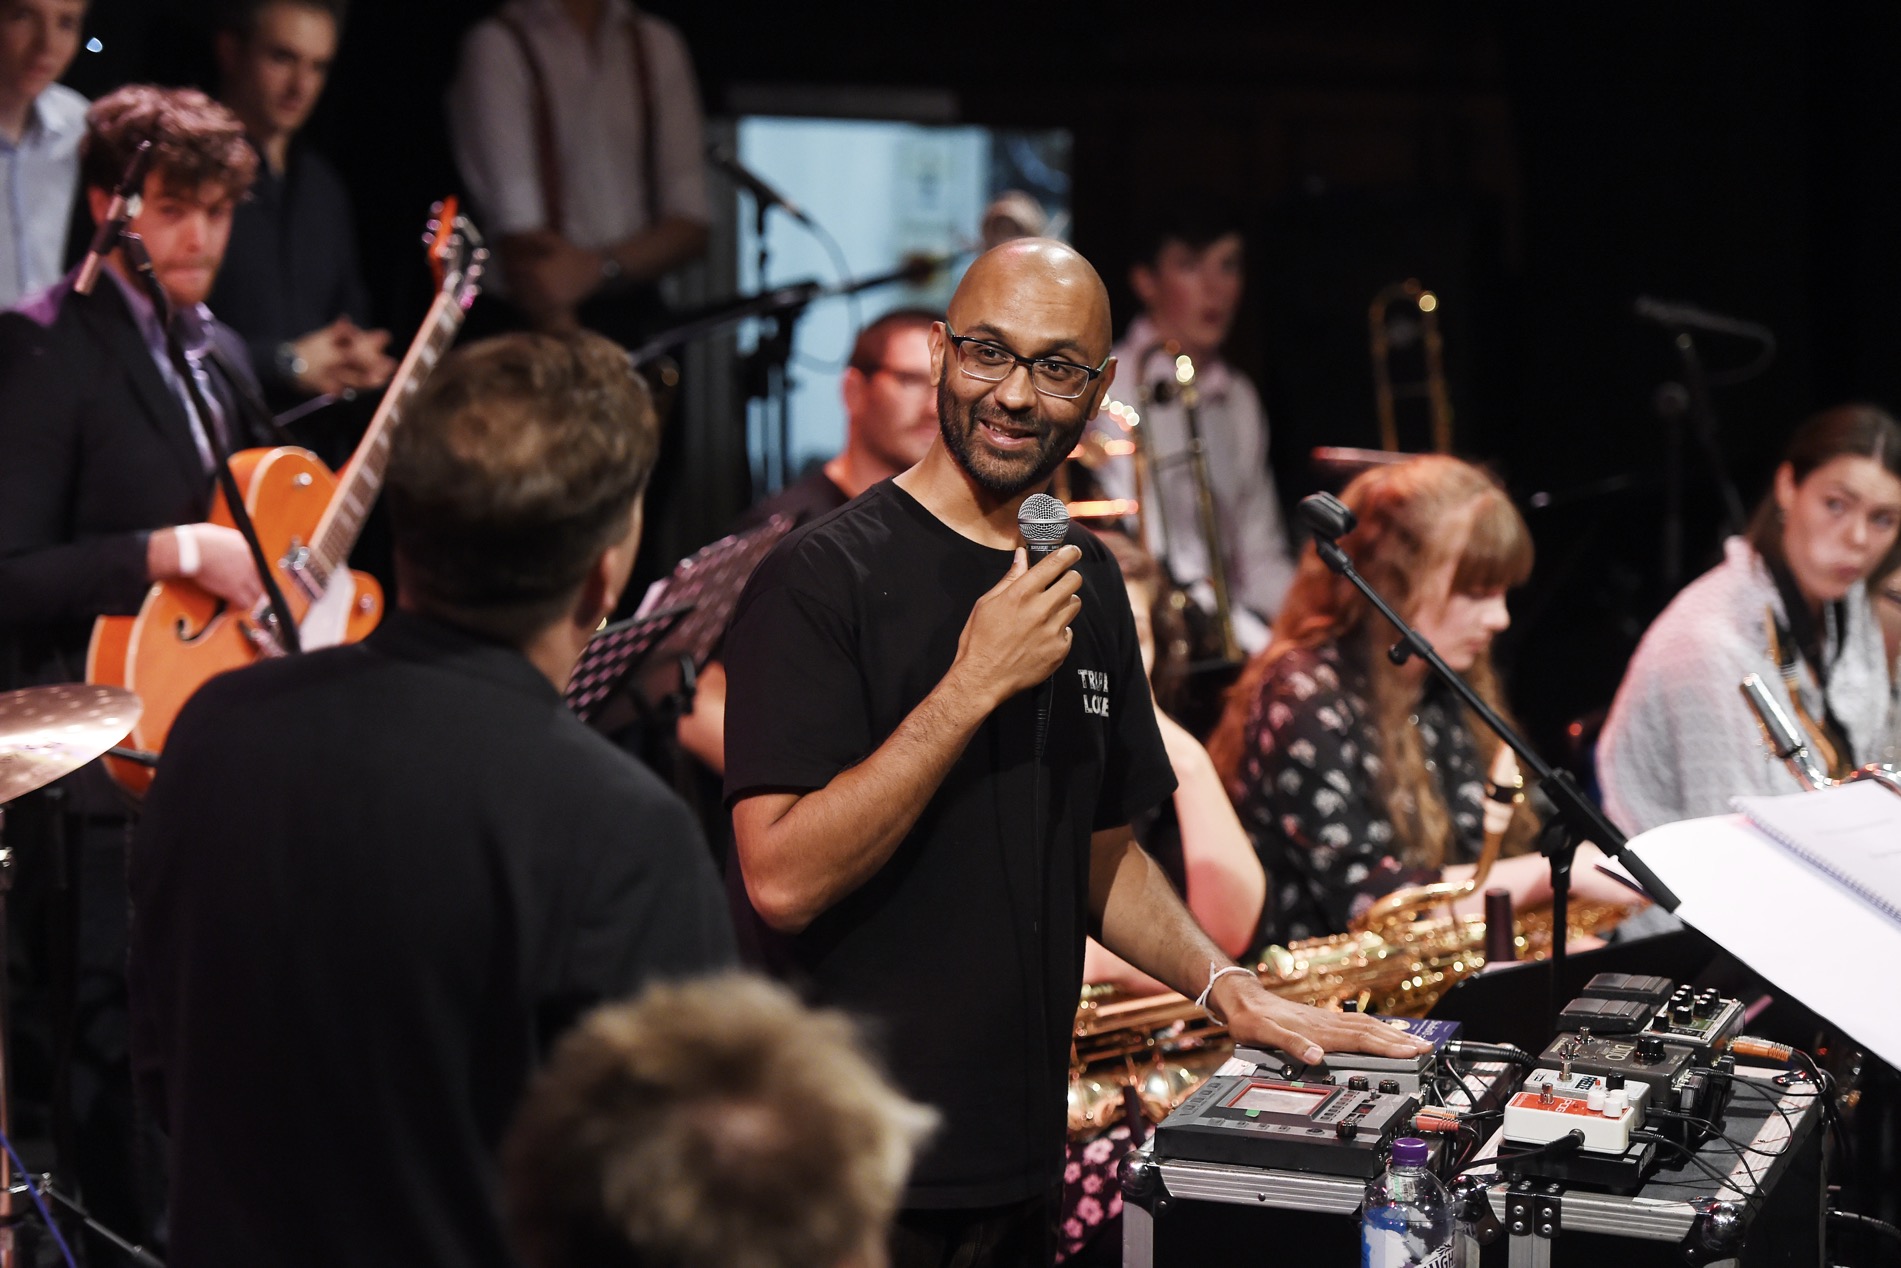 Jason Singh introducing his next adventure into sound at Edinburgh Jazz & Blues Festival hub venue, Teviot Row, 22 July 2018